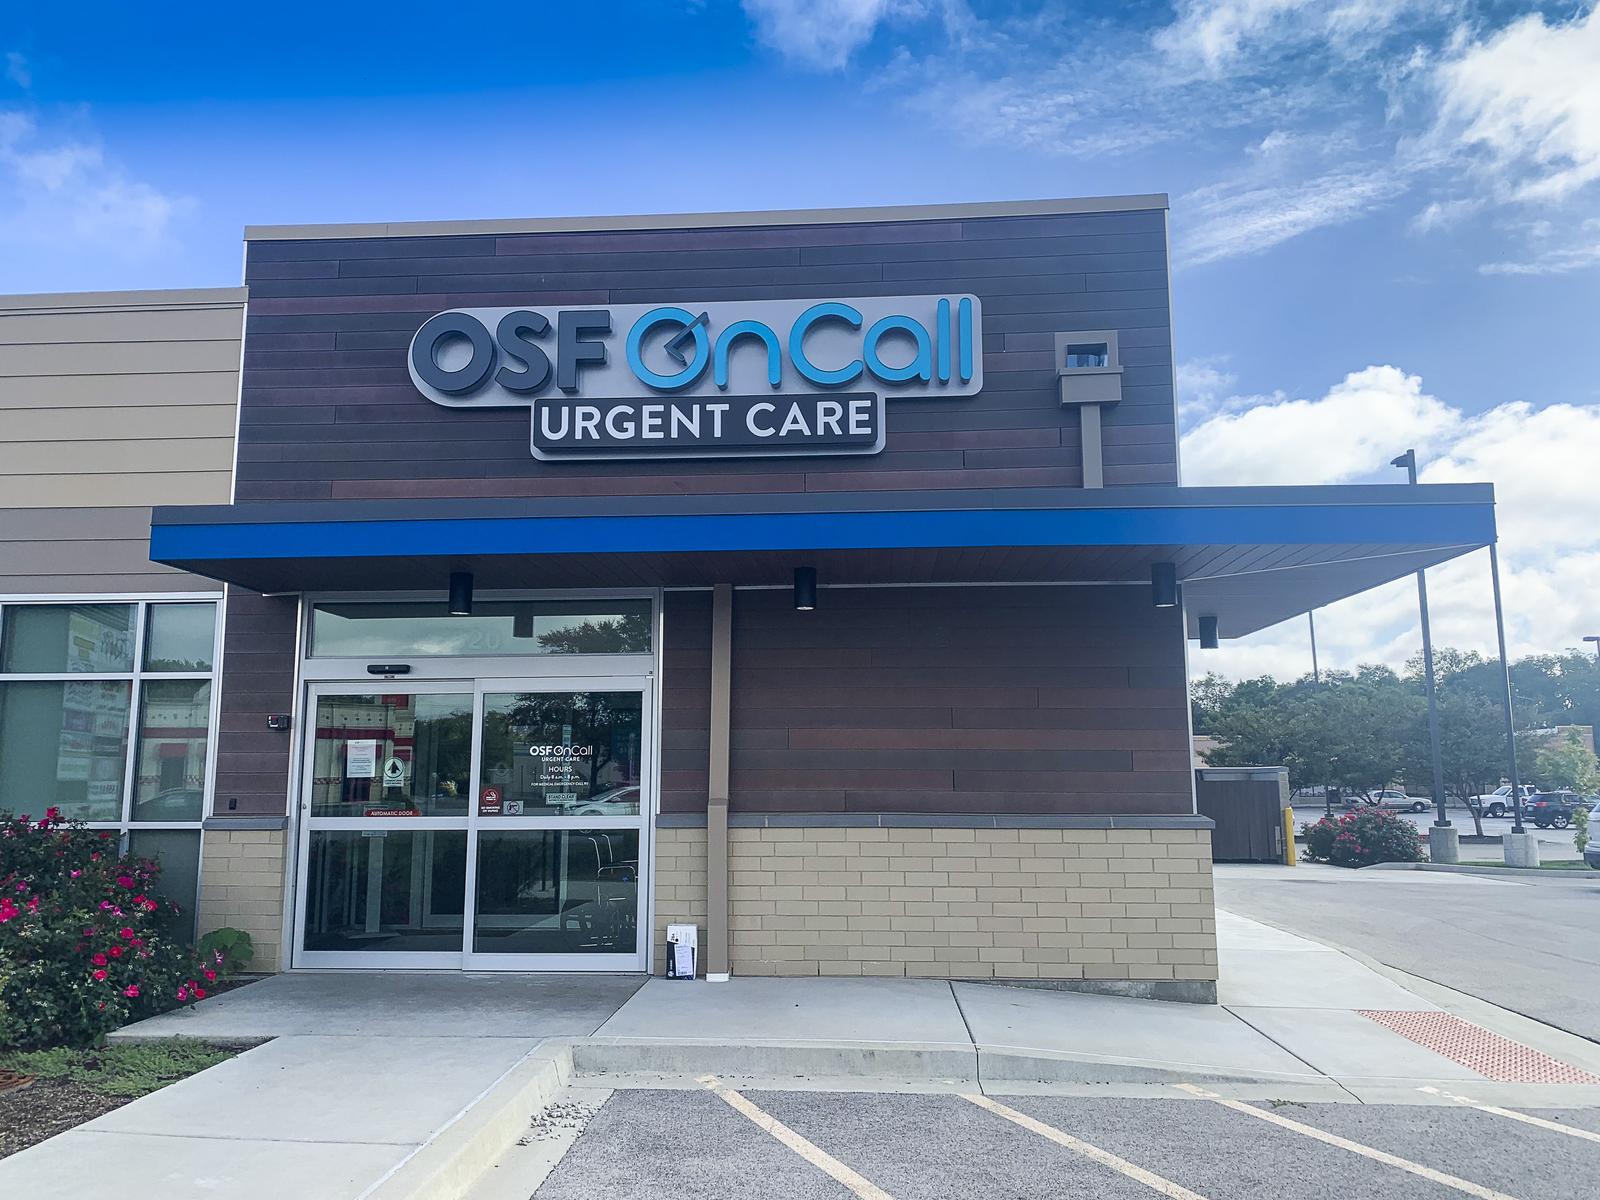 OSF OnCall Urgent Care, 520 N. Cunningham Avenue, Urbana, Illinois, 61802